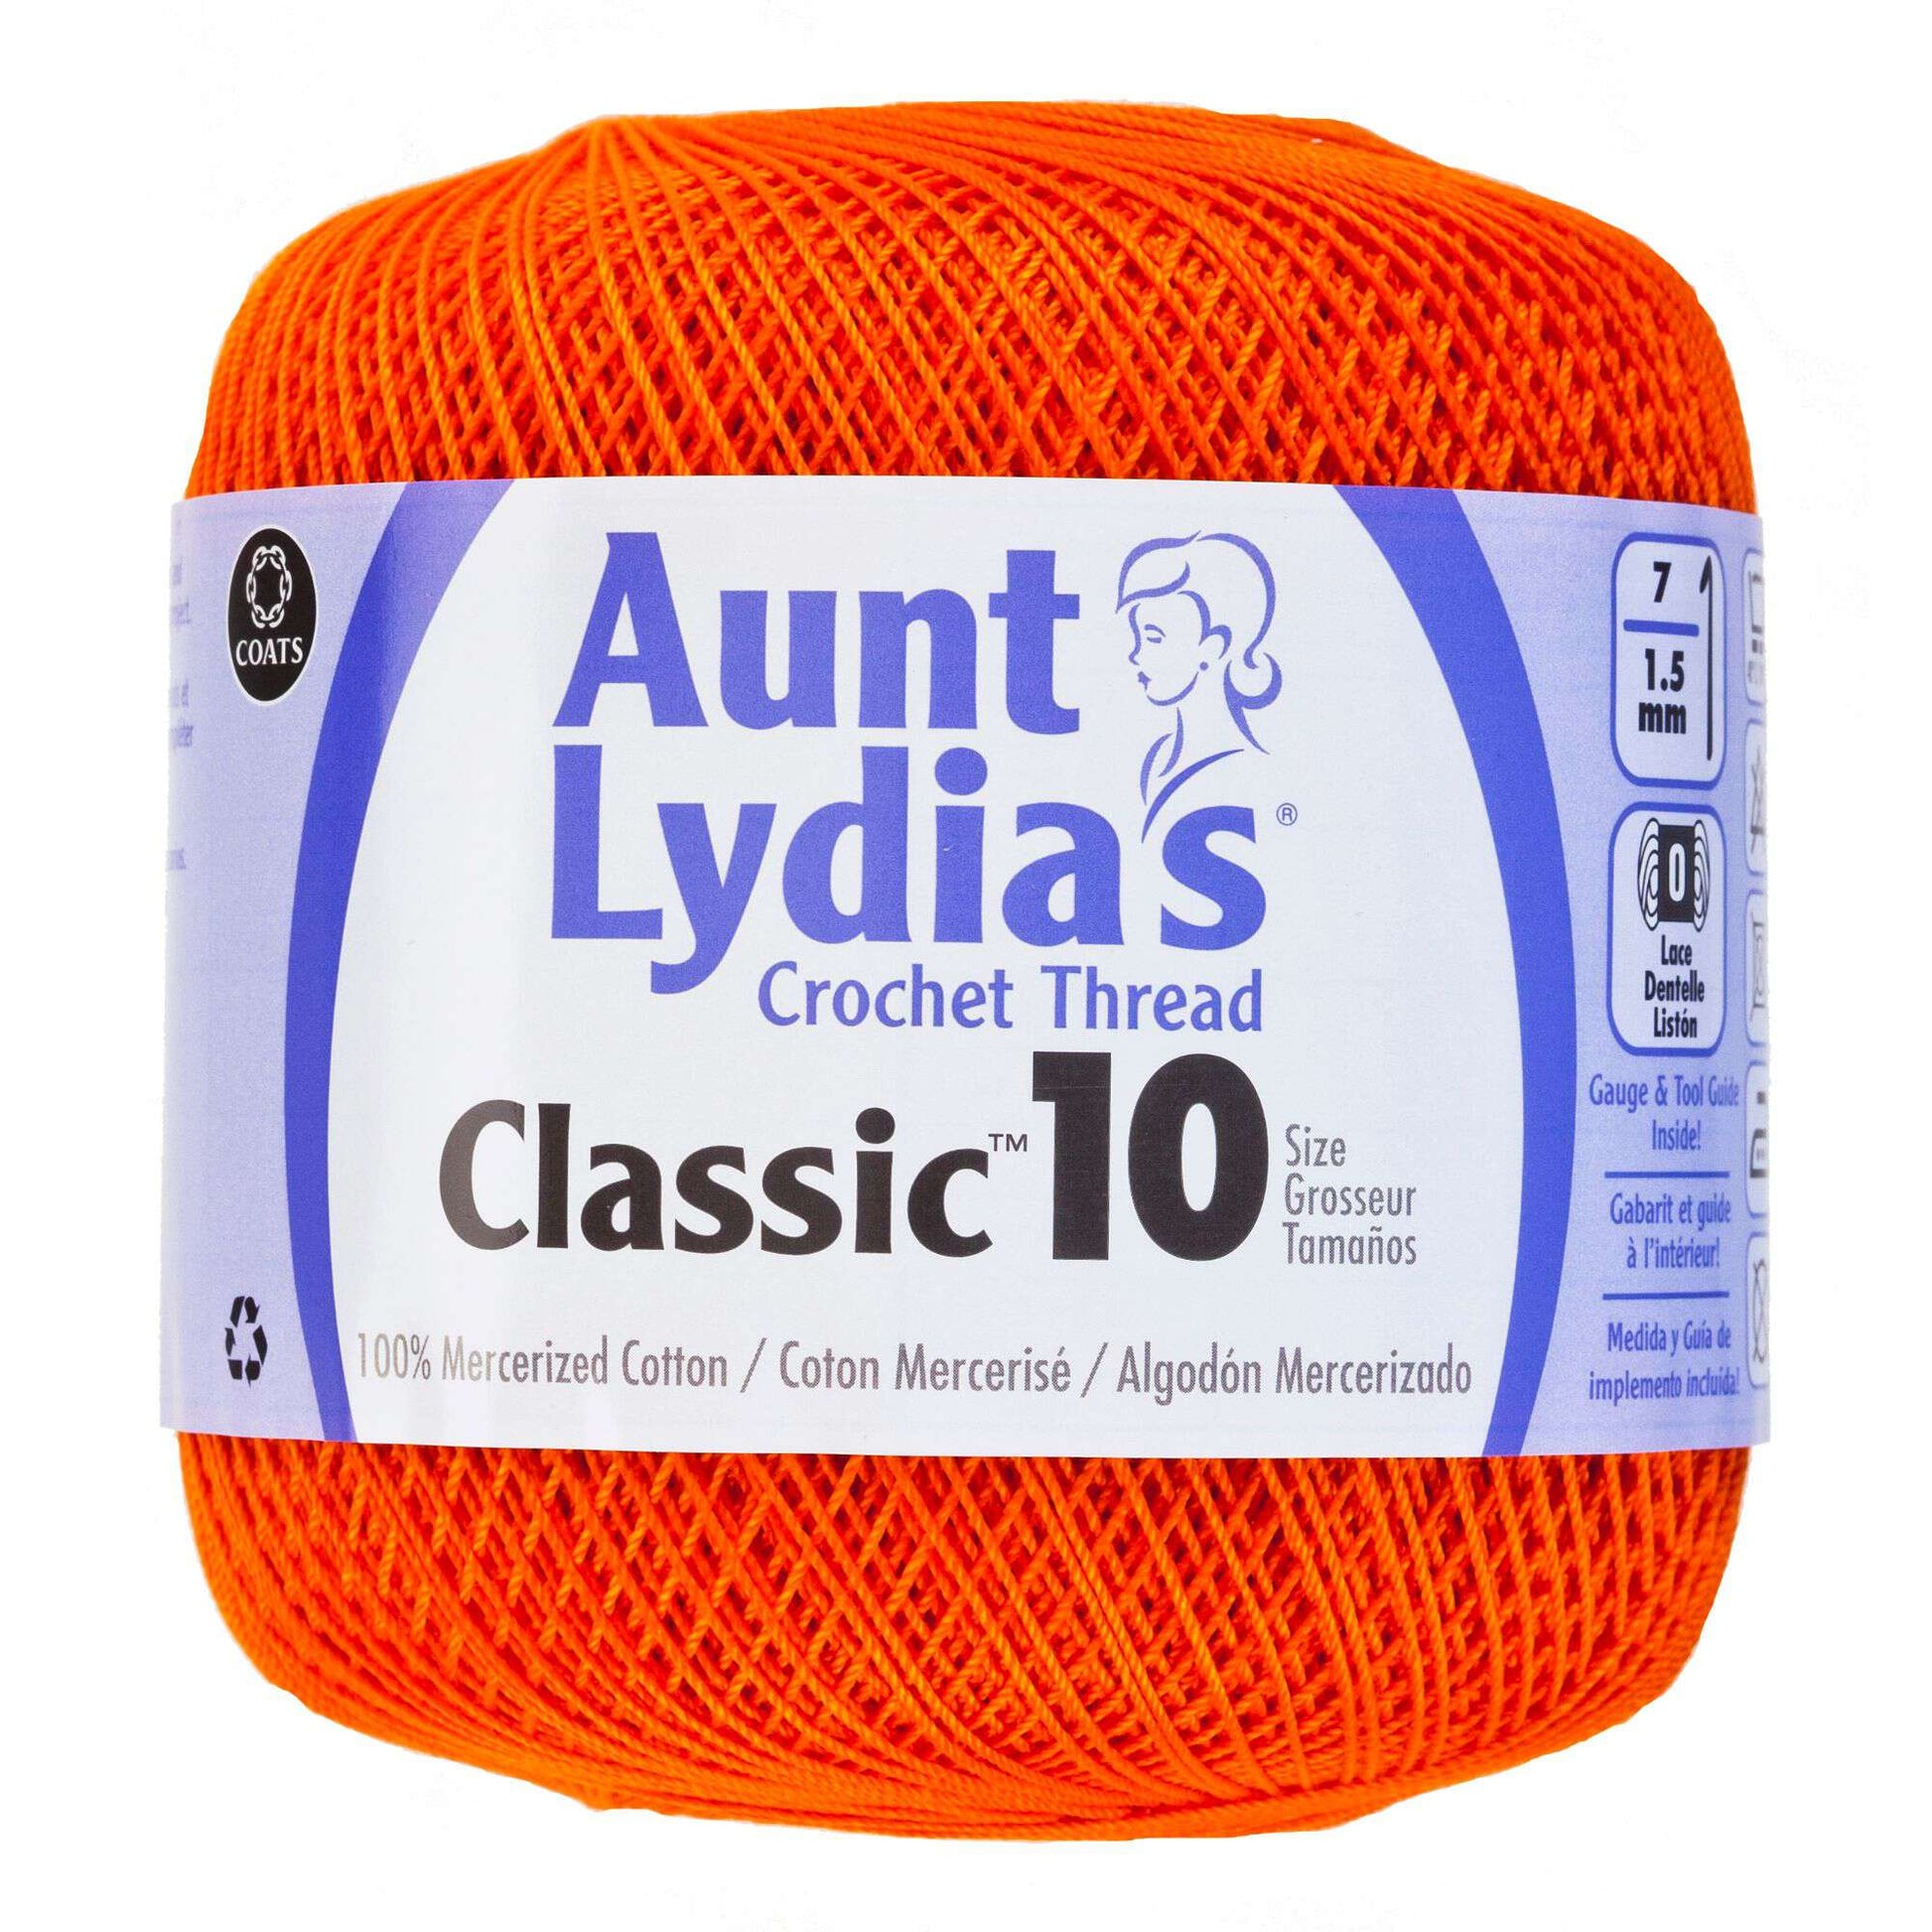 Aunt Lydia's Classic Crochet Thread Size 10 - Clearance shades Pumpkin